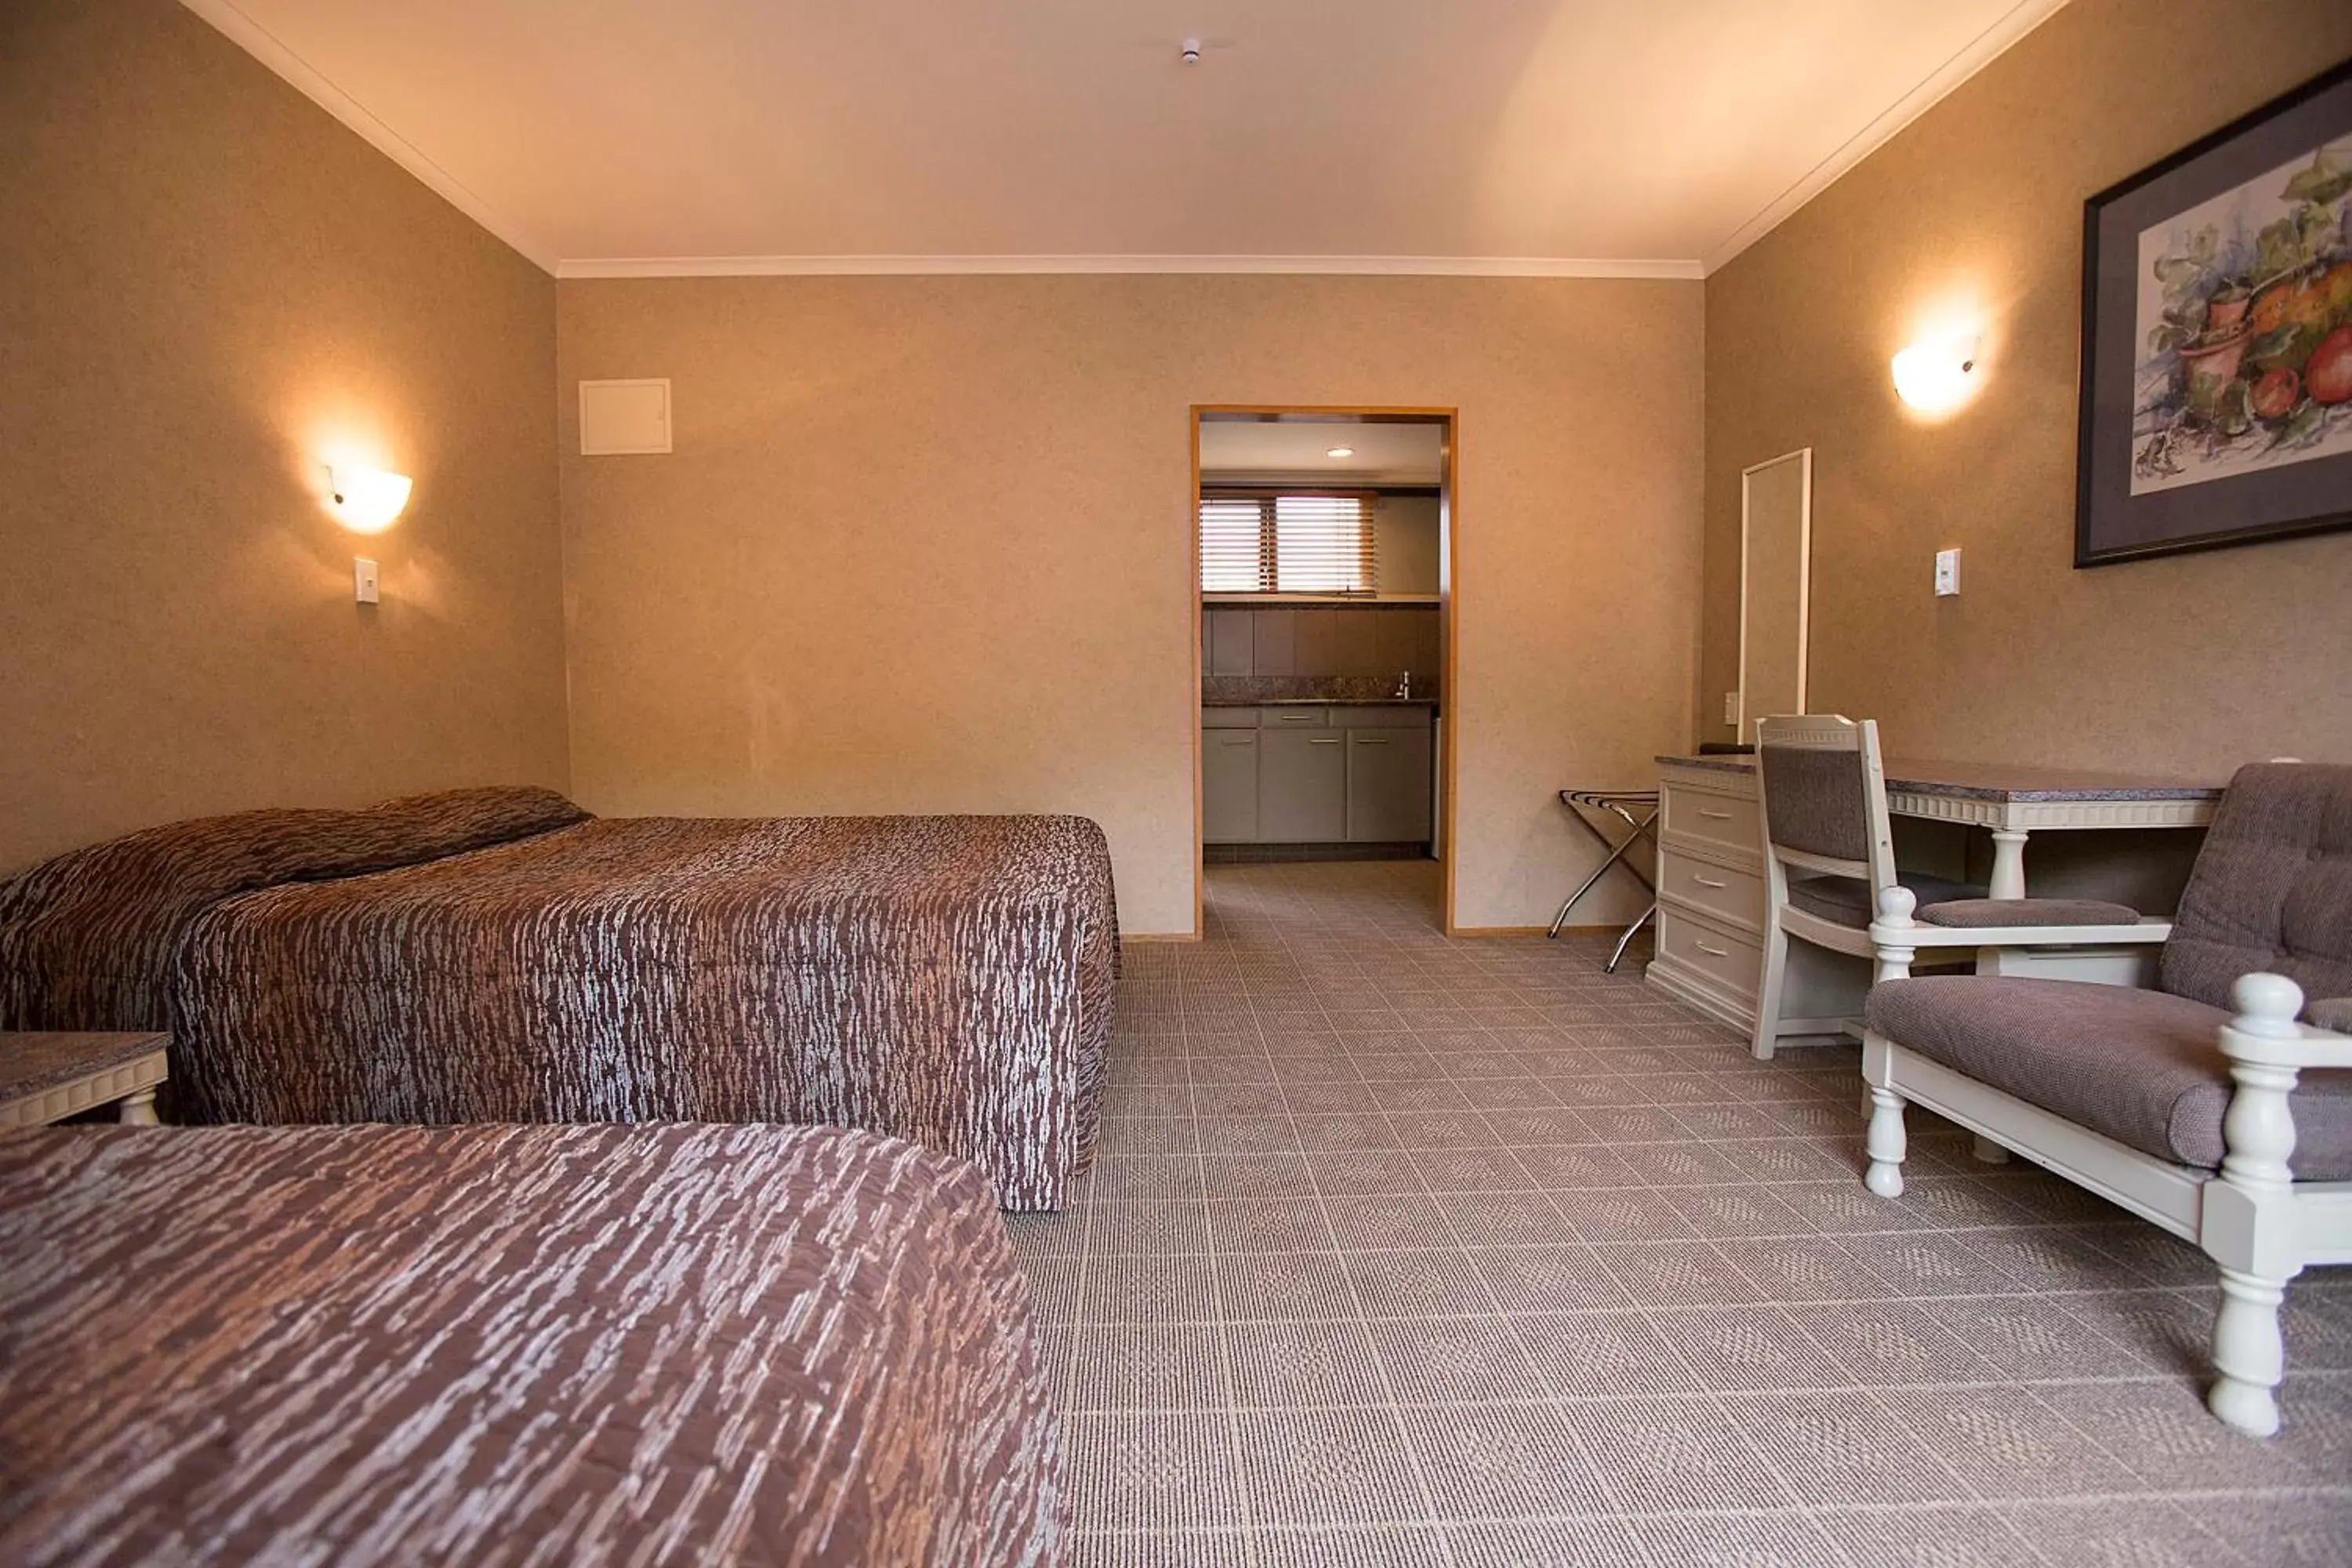 Bedroom in Distinction Coachman Hotel, Palmerston North